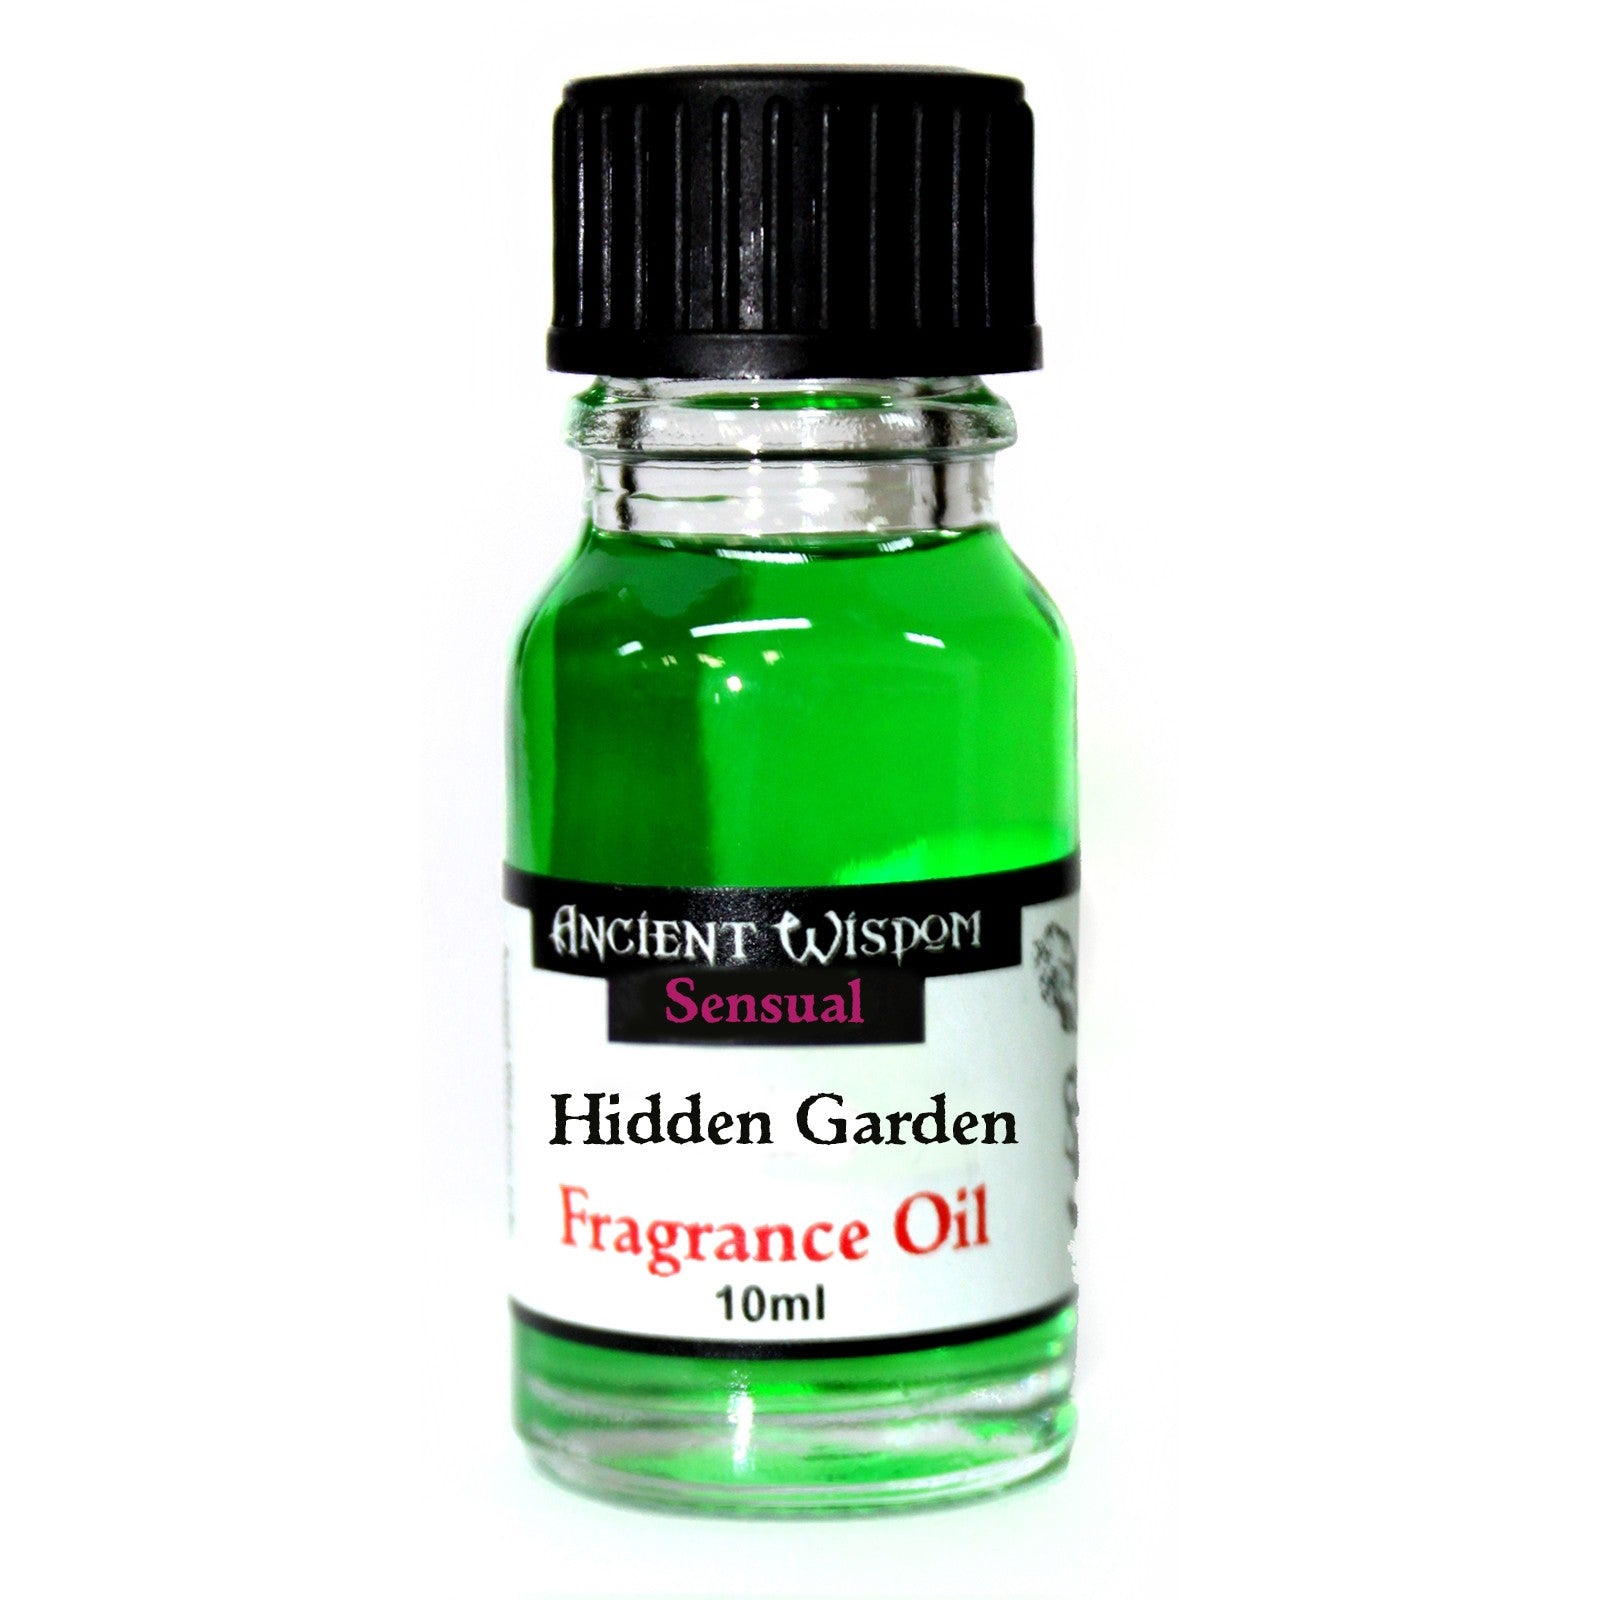 View 10ml Hidden Garden Fragrance Oil information